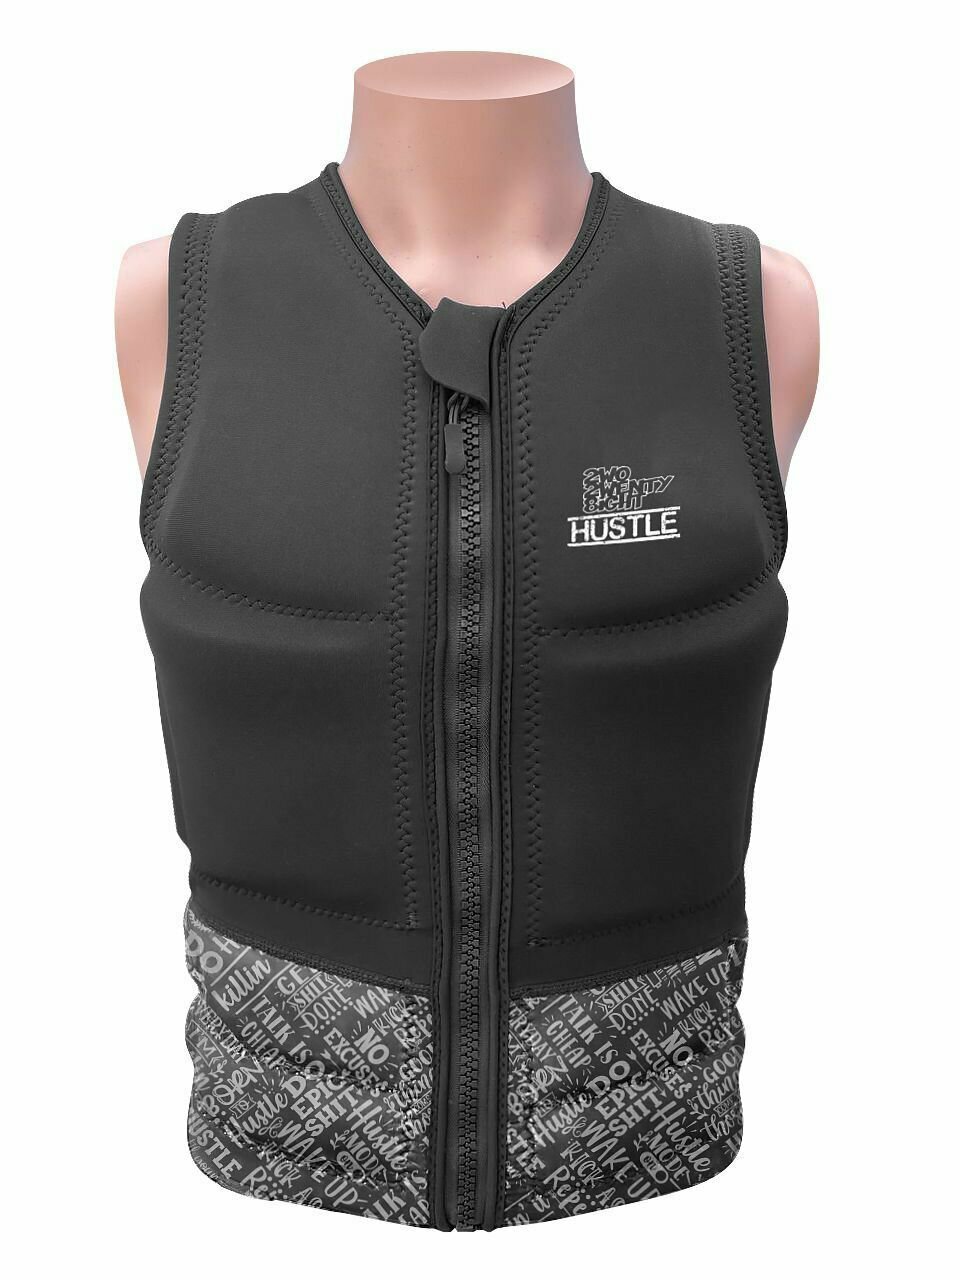 Жилет для вейкборда 228 2wo2wenty8ight Hustle vest black ss23 (XL), для сапа, для сапборда, для вейксерфинга, для серфа